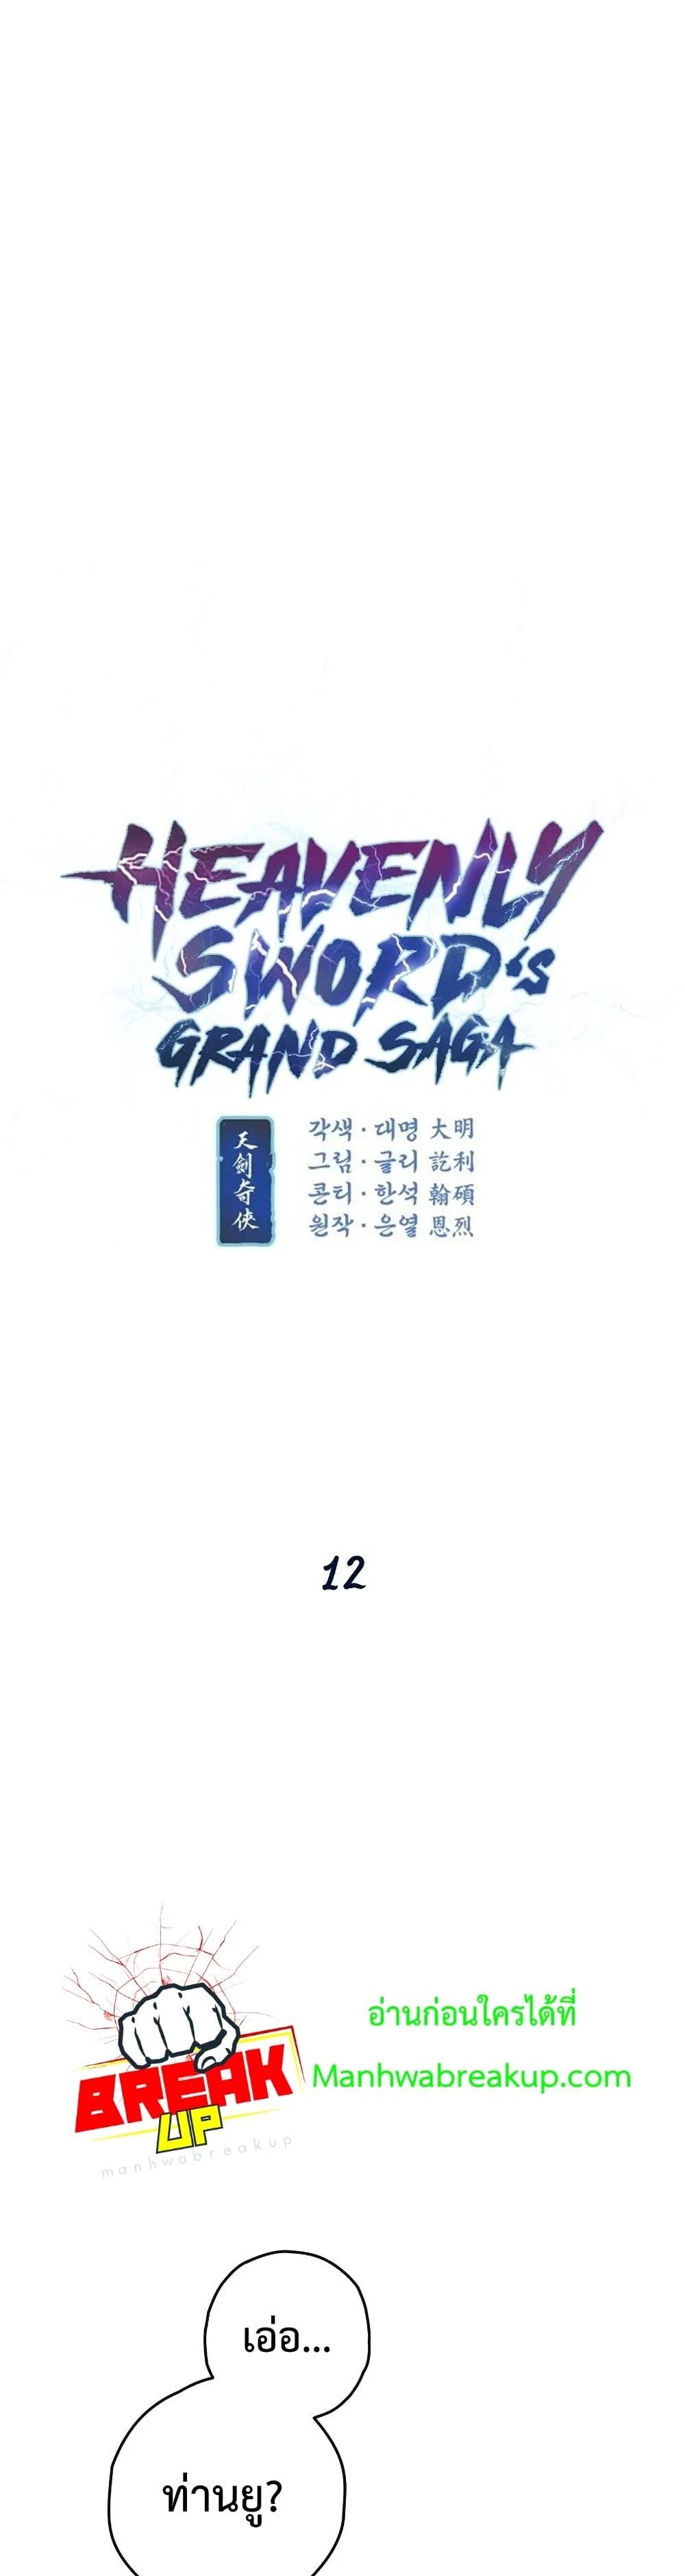 Heavenly Sword’s Grand Saga ตอนที่ 12 (4)